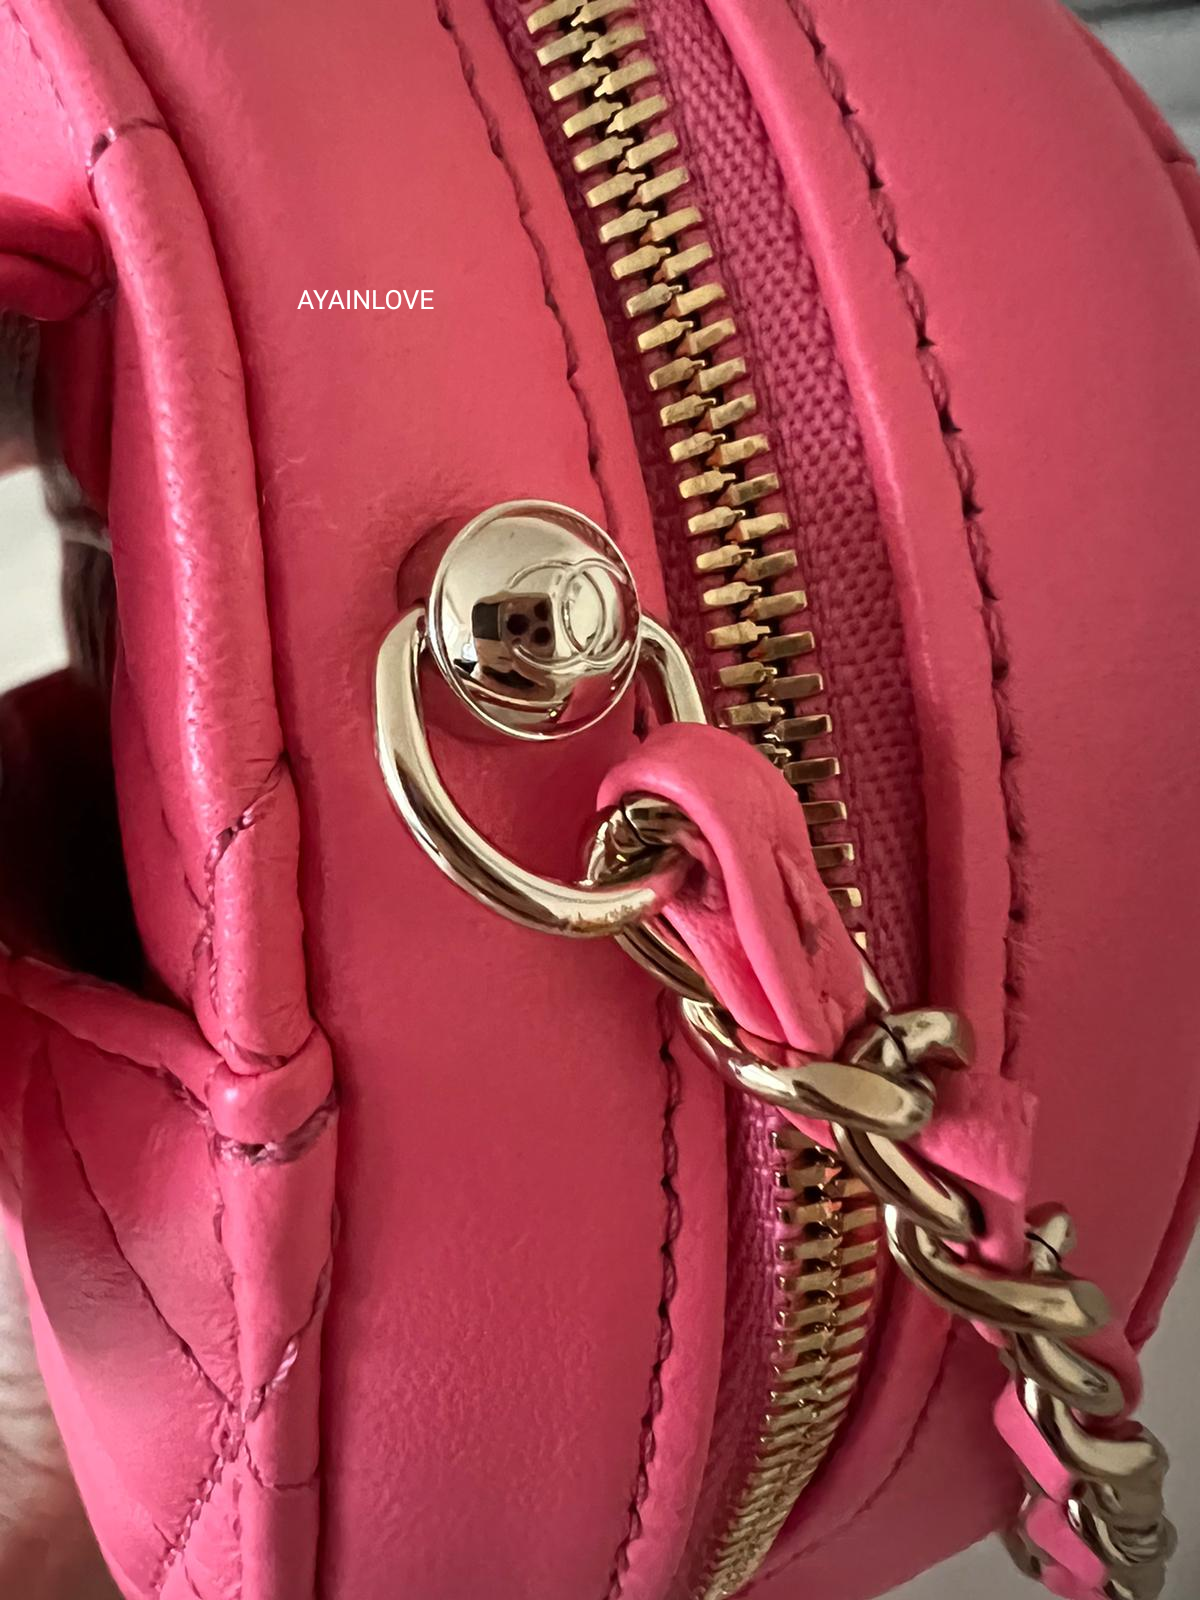 chanel round bag pink